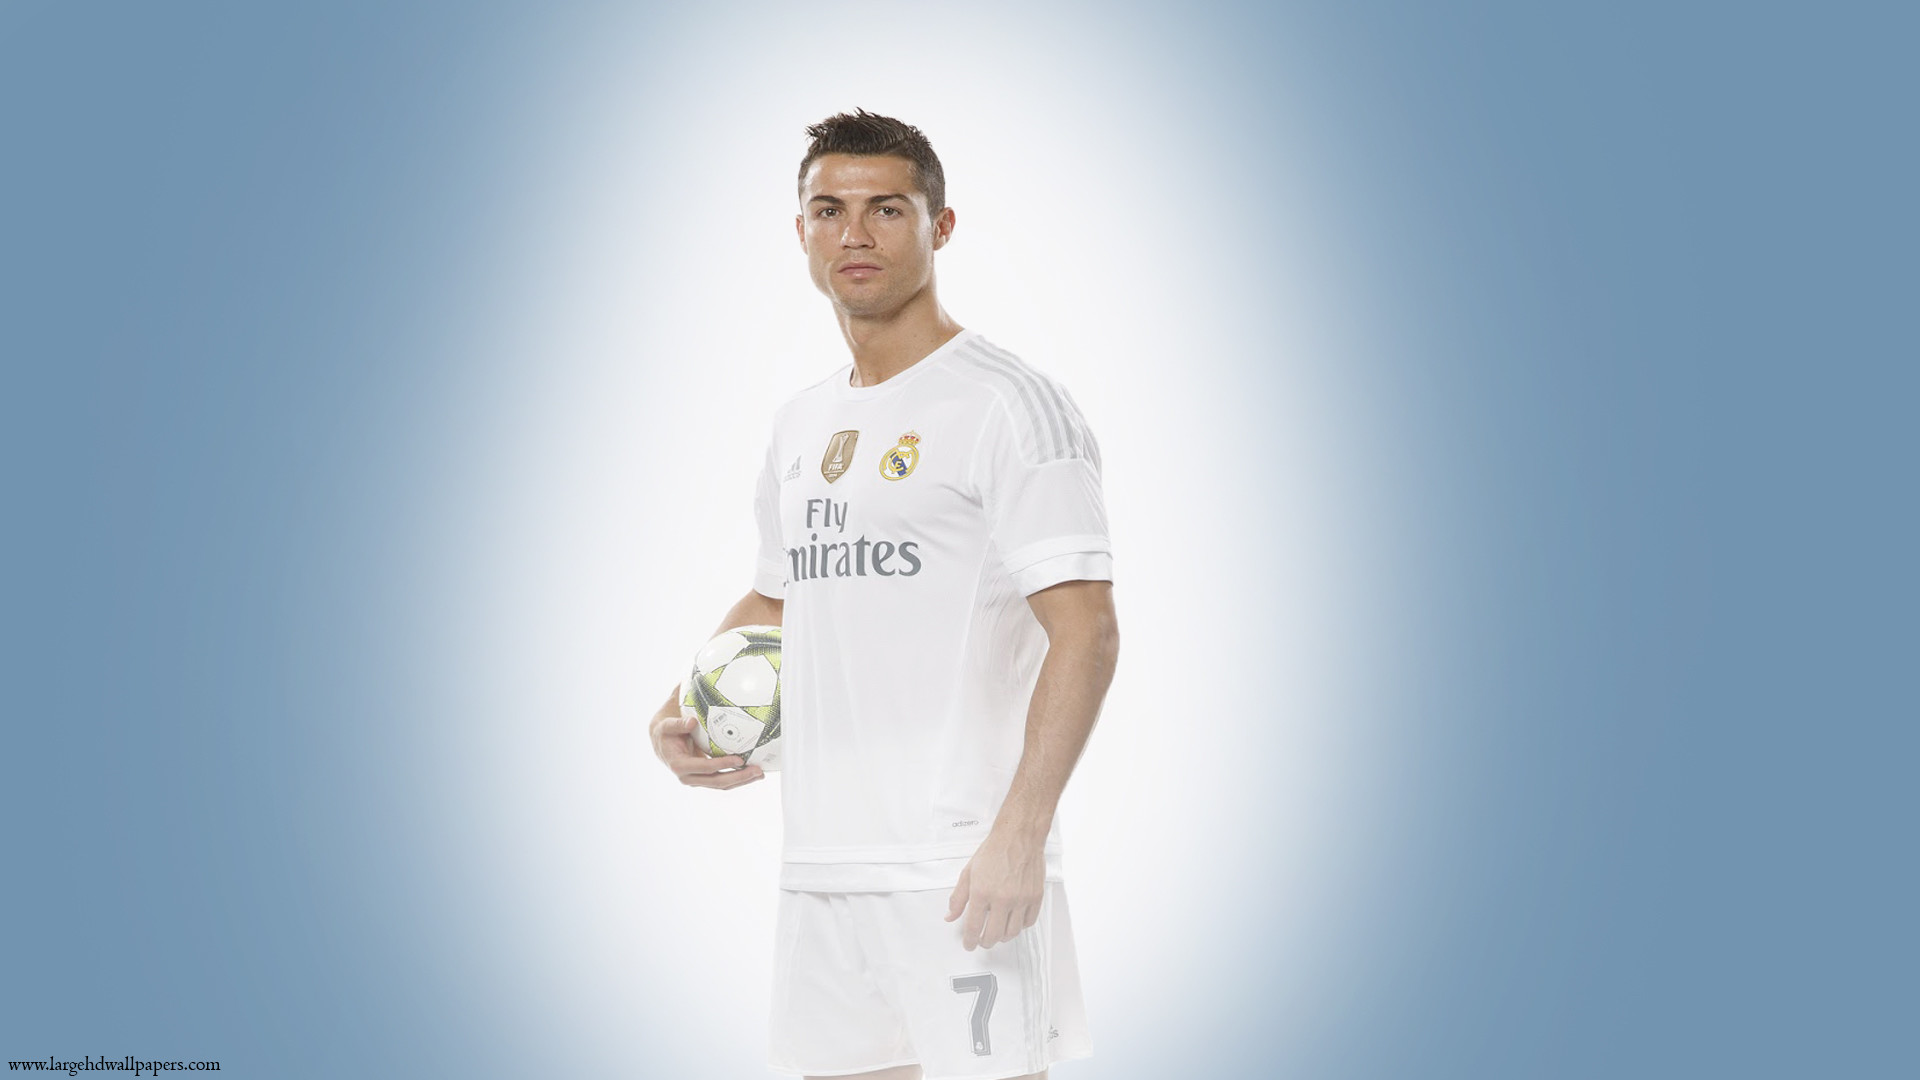 1920x1080 Cristiano Ronaldo Best Full HD Wallpapers For Desktop Background